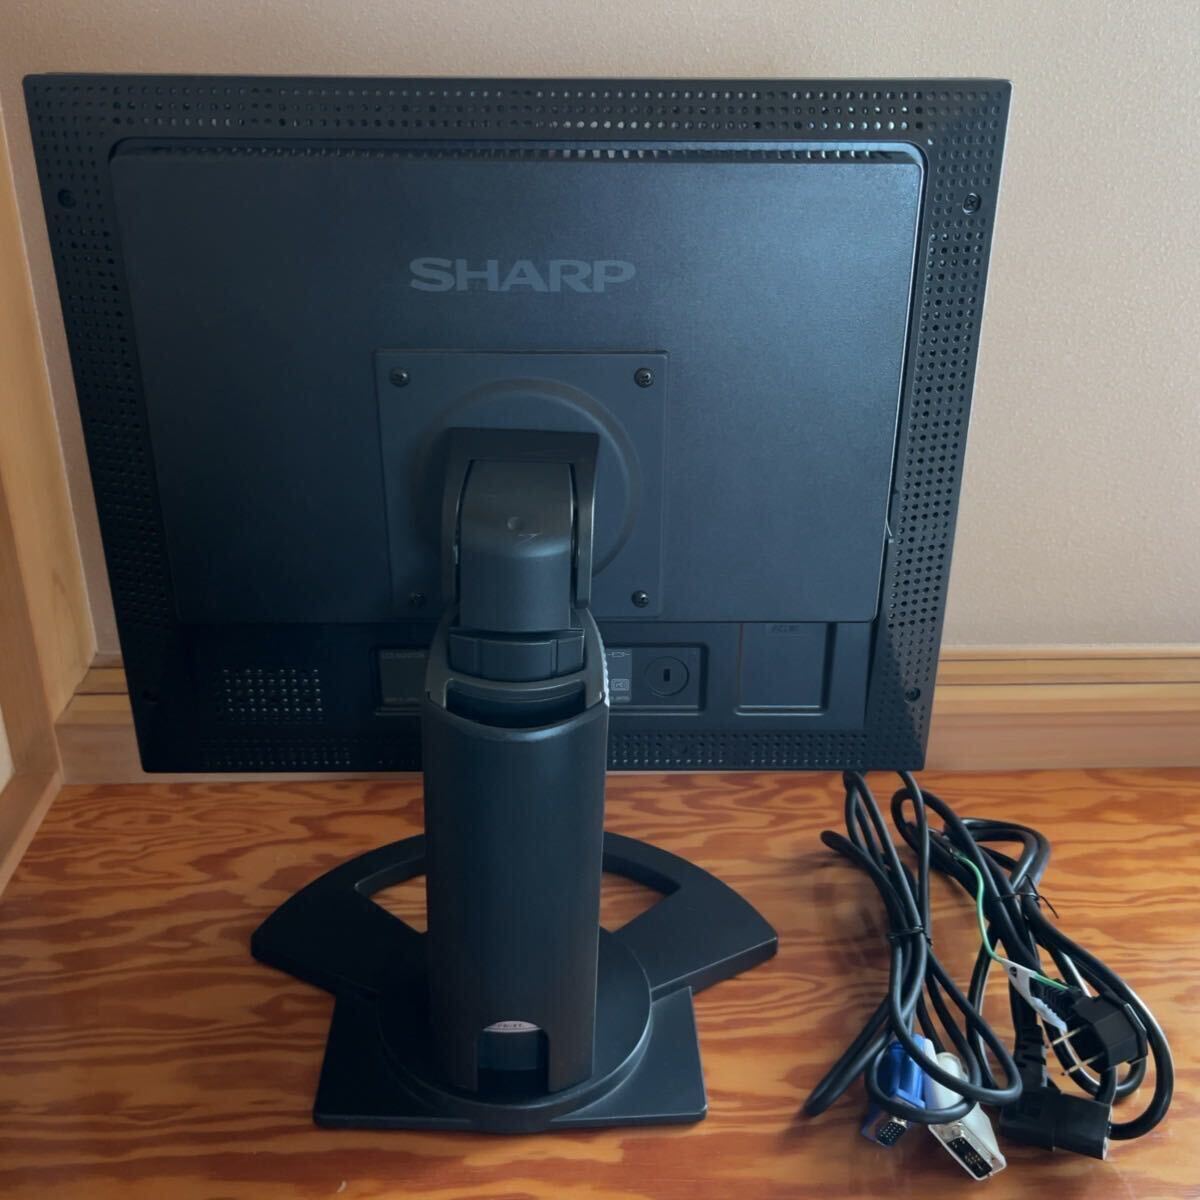 SHARP LL-T1820-B sharp liquid crystal monitor 